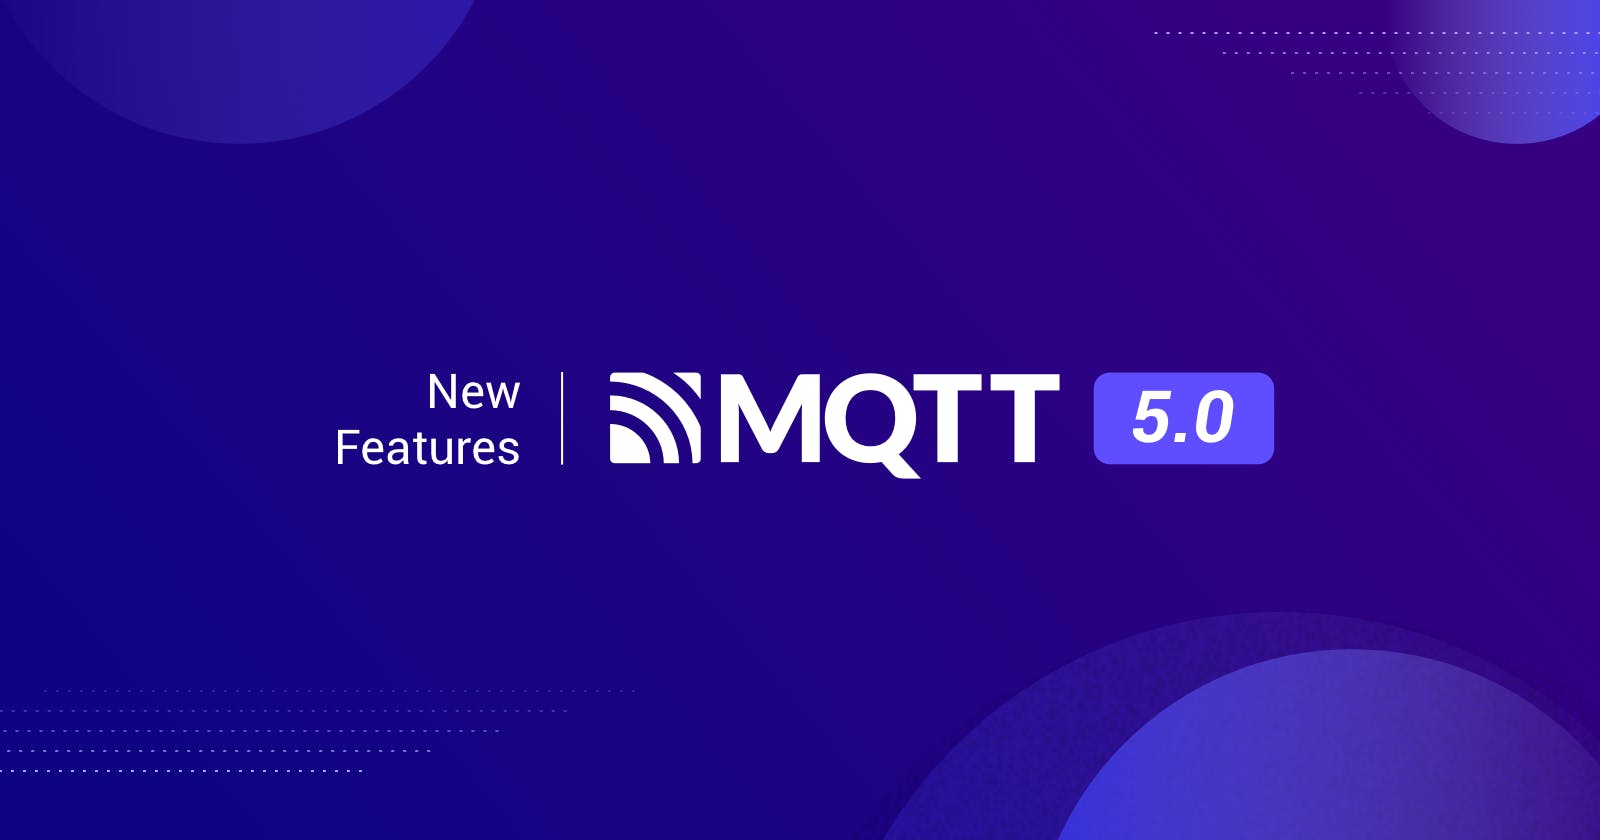 Enhanced Authentication - MQTT 5.0 New Features